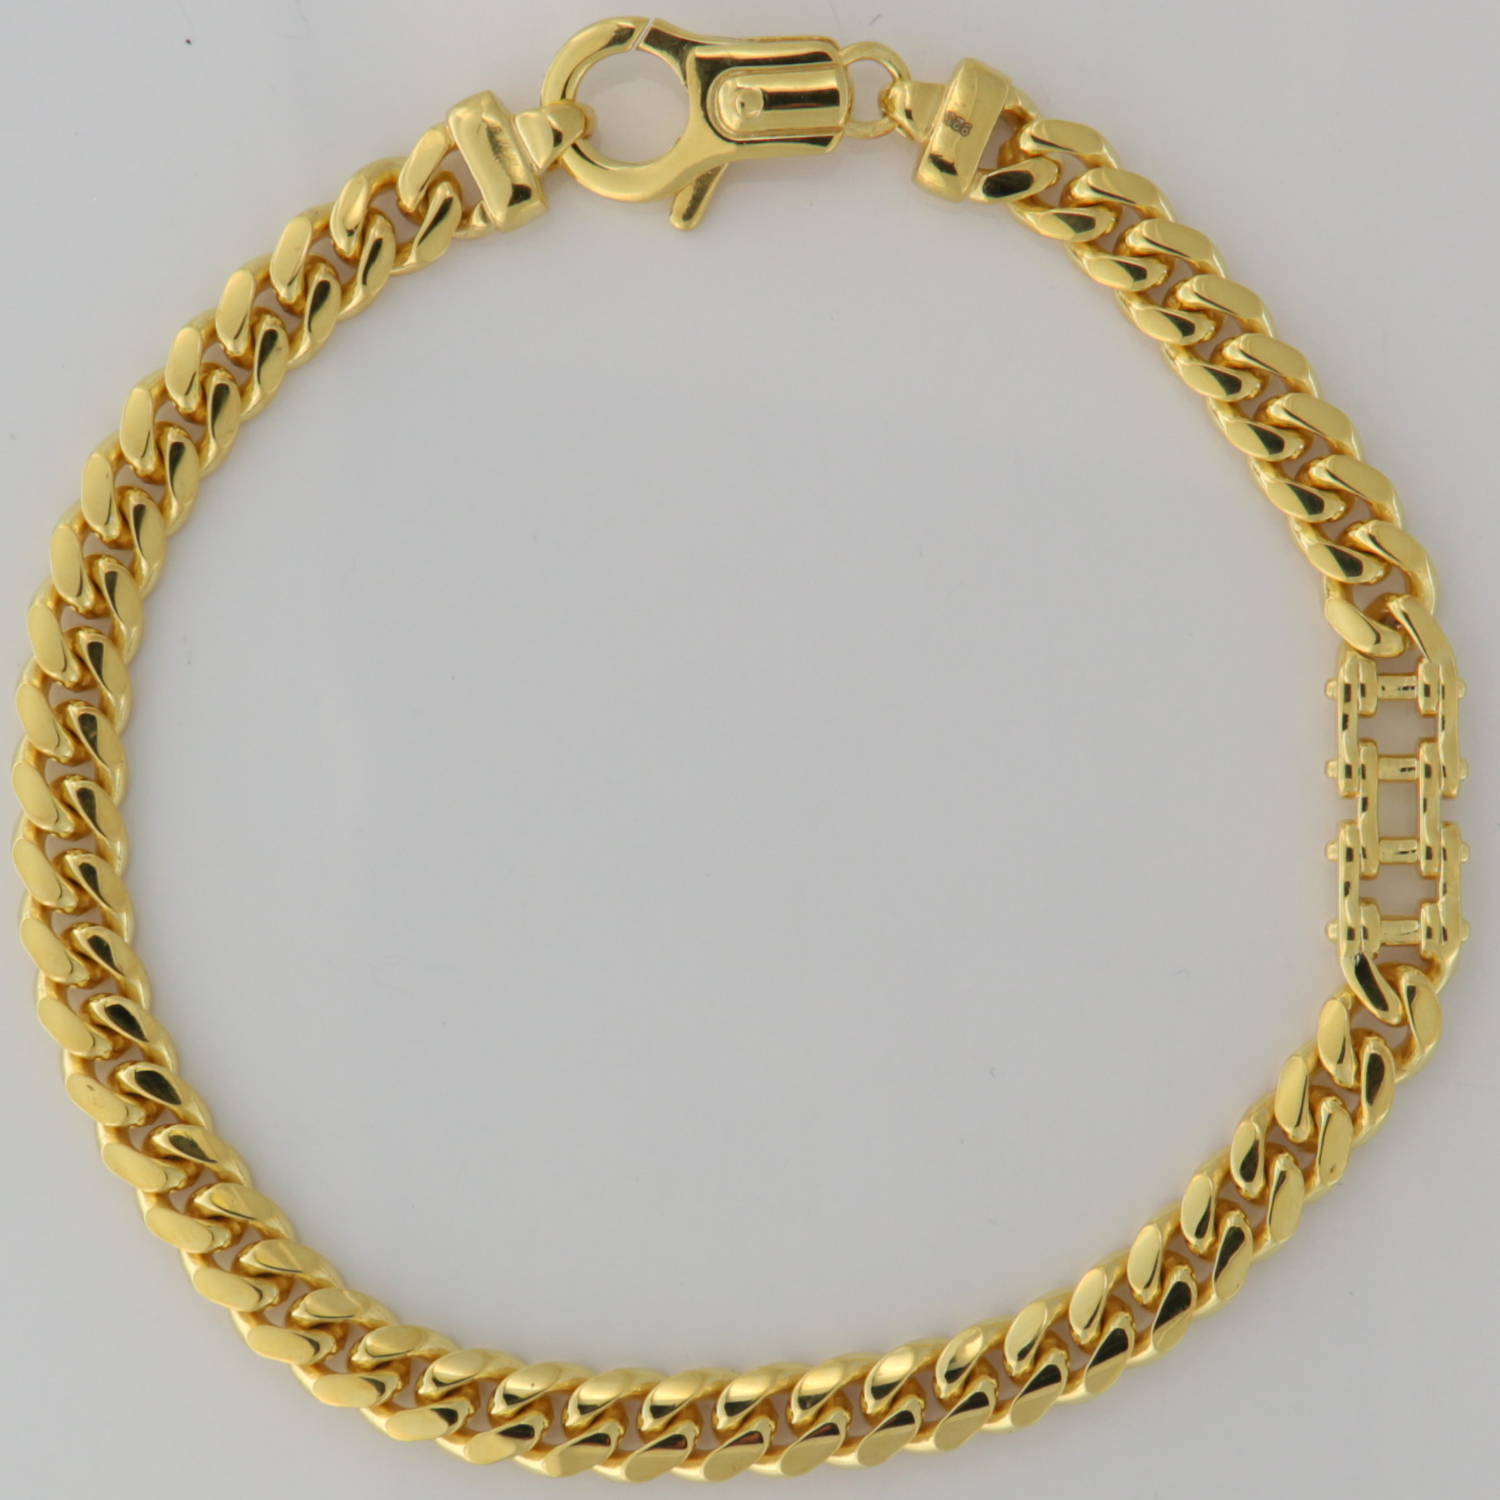 Bracelet men's 1 bike chain element gold plated-image